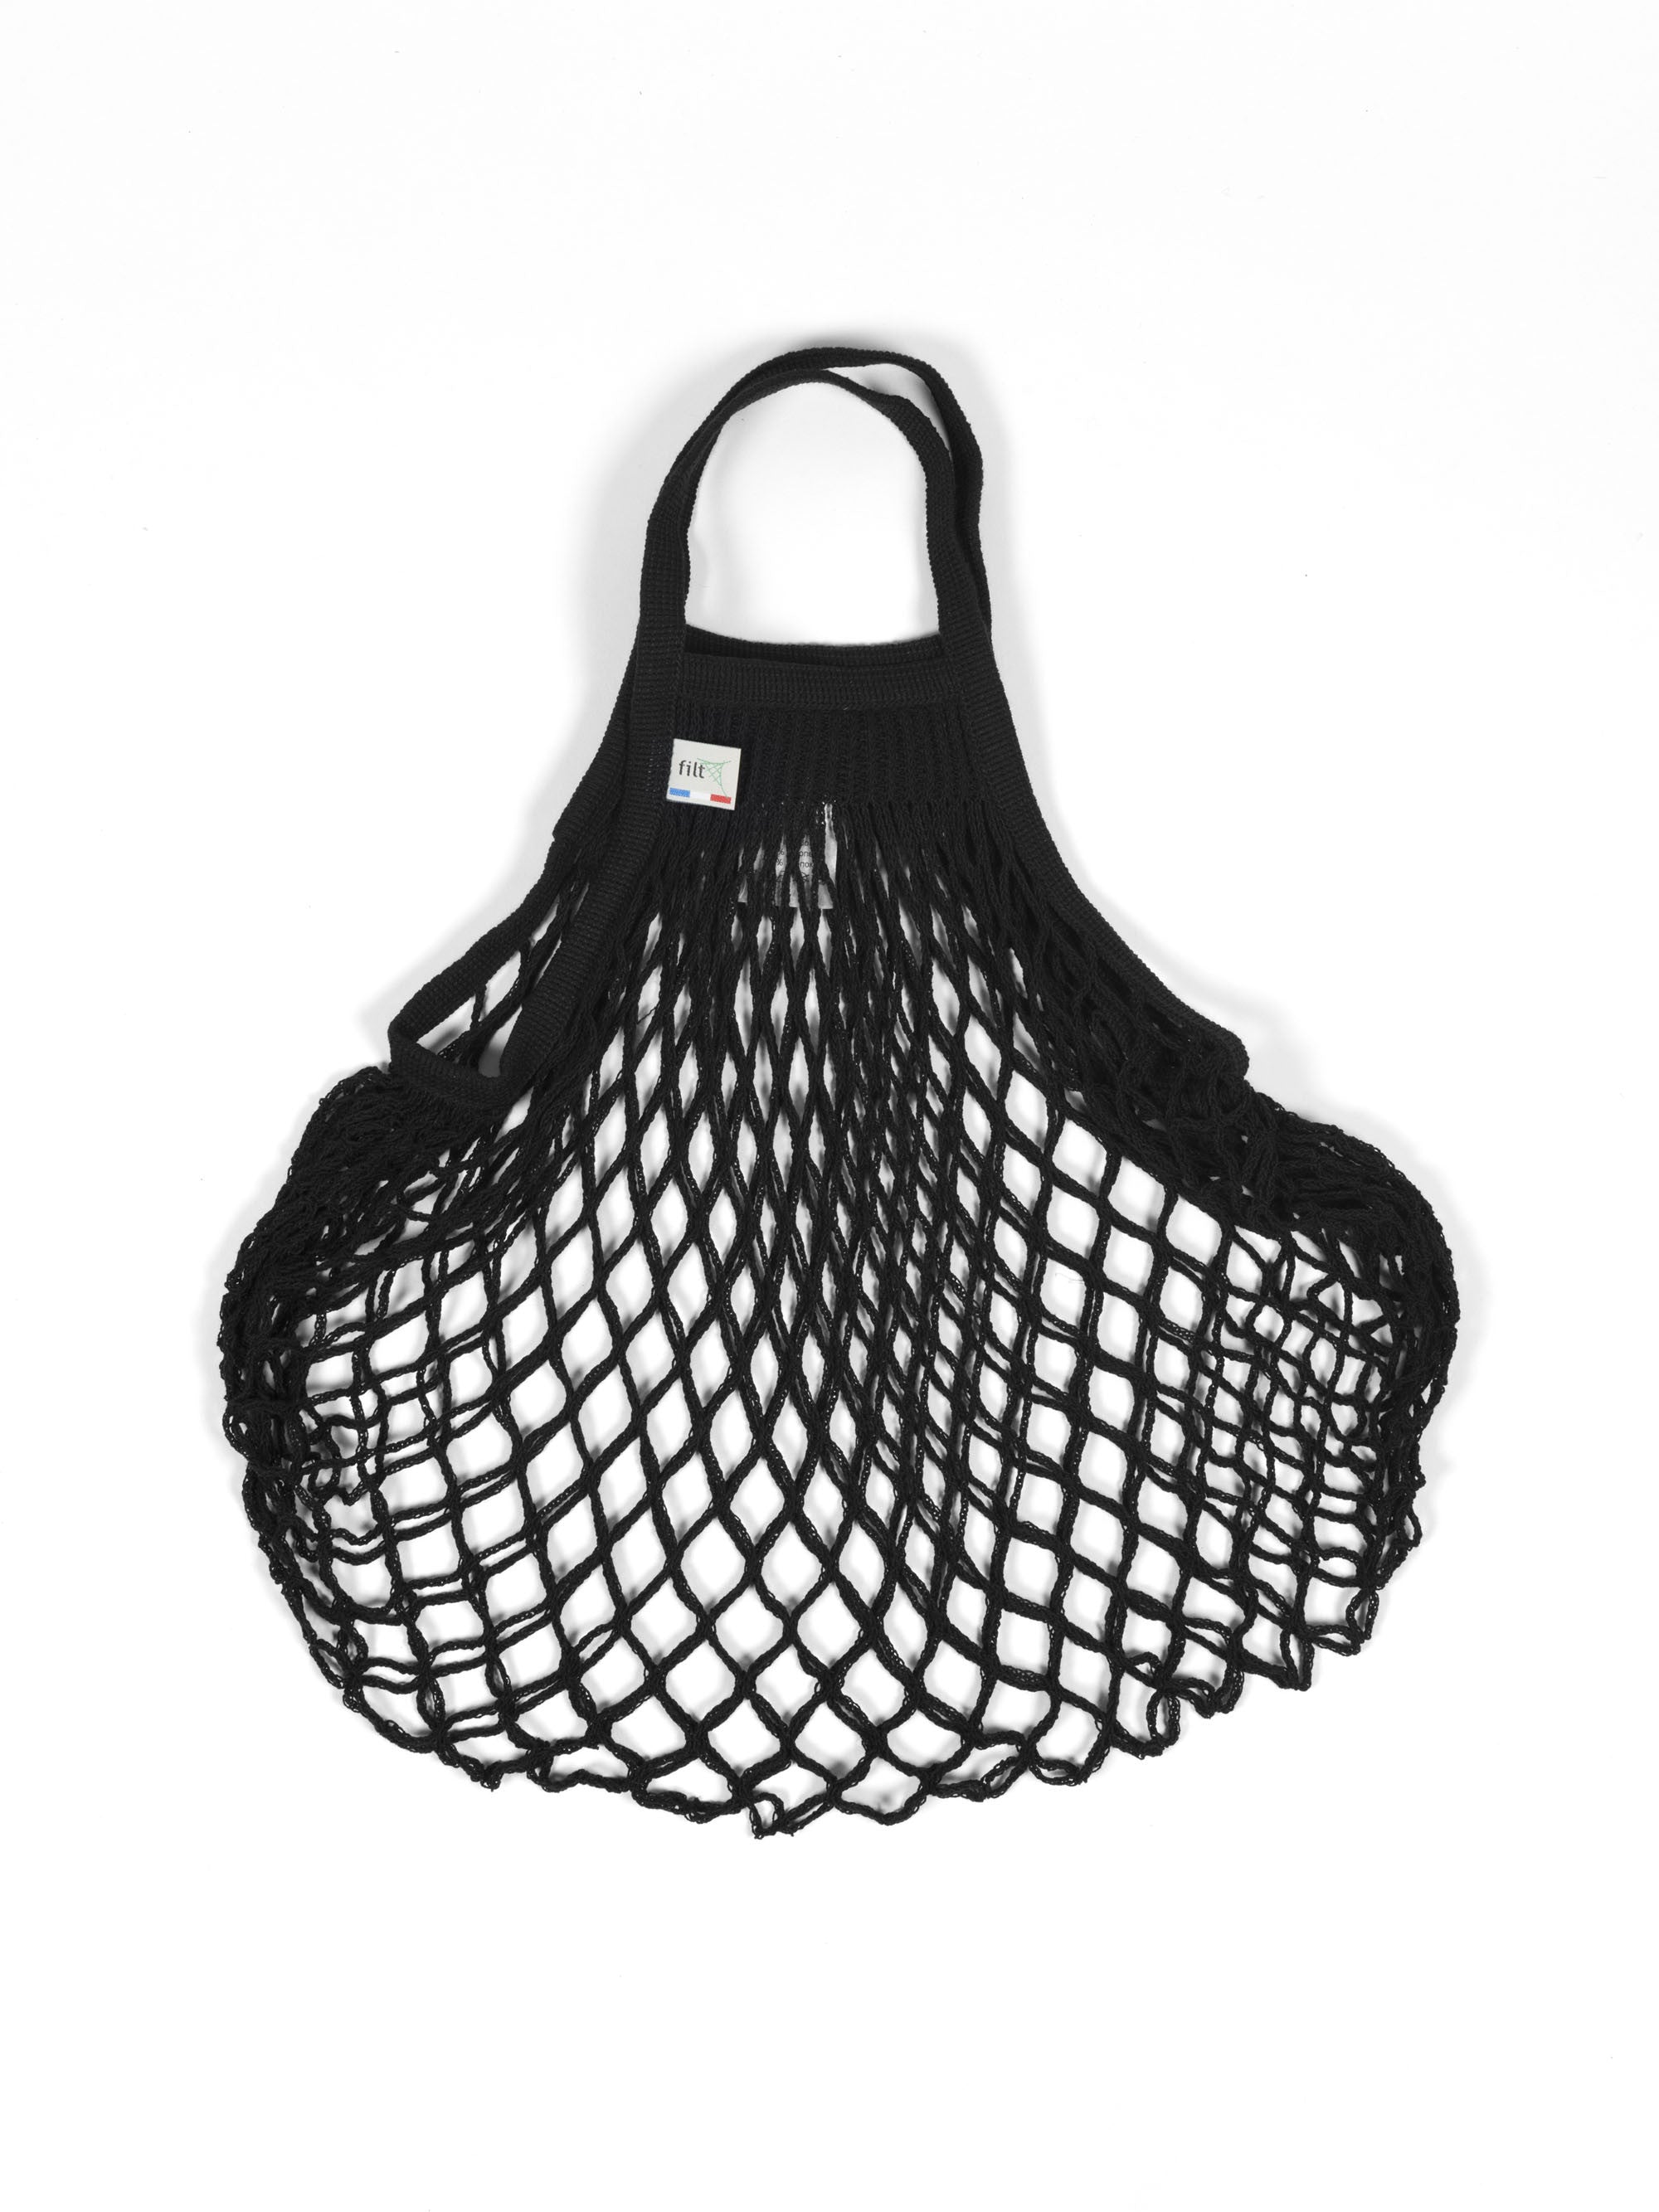 Filt Mini Bag in Black Bag Filt Bags Brand_Filt Shopping Bags Textiles_Shoppers 2220-301BLKSm_Mini_Black_A